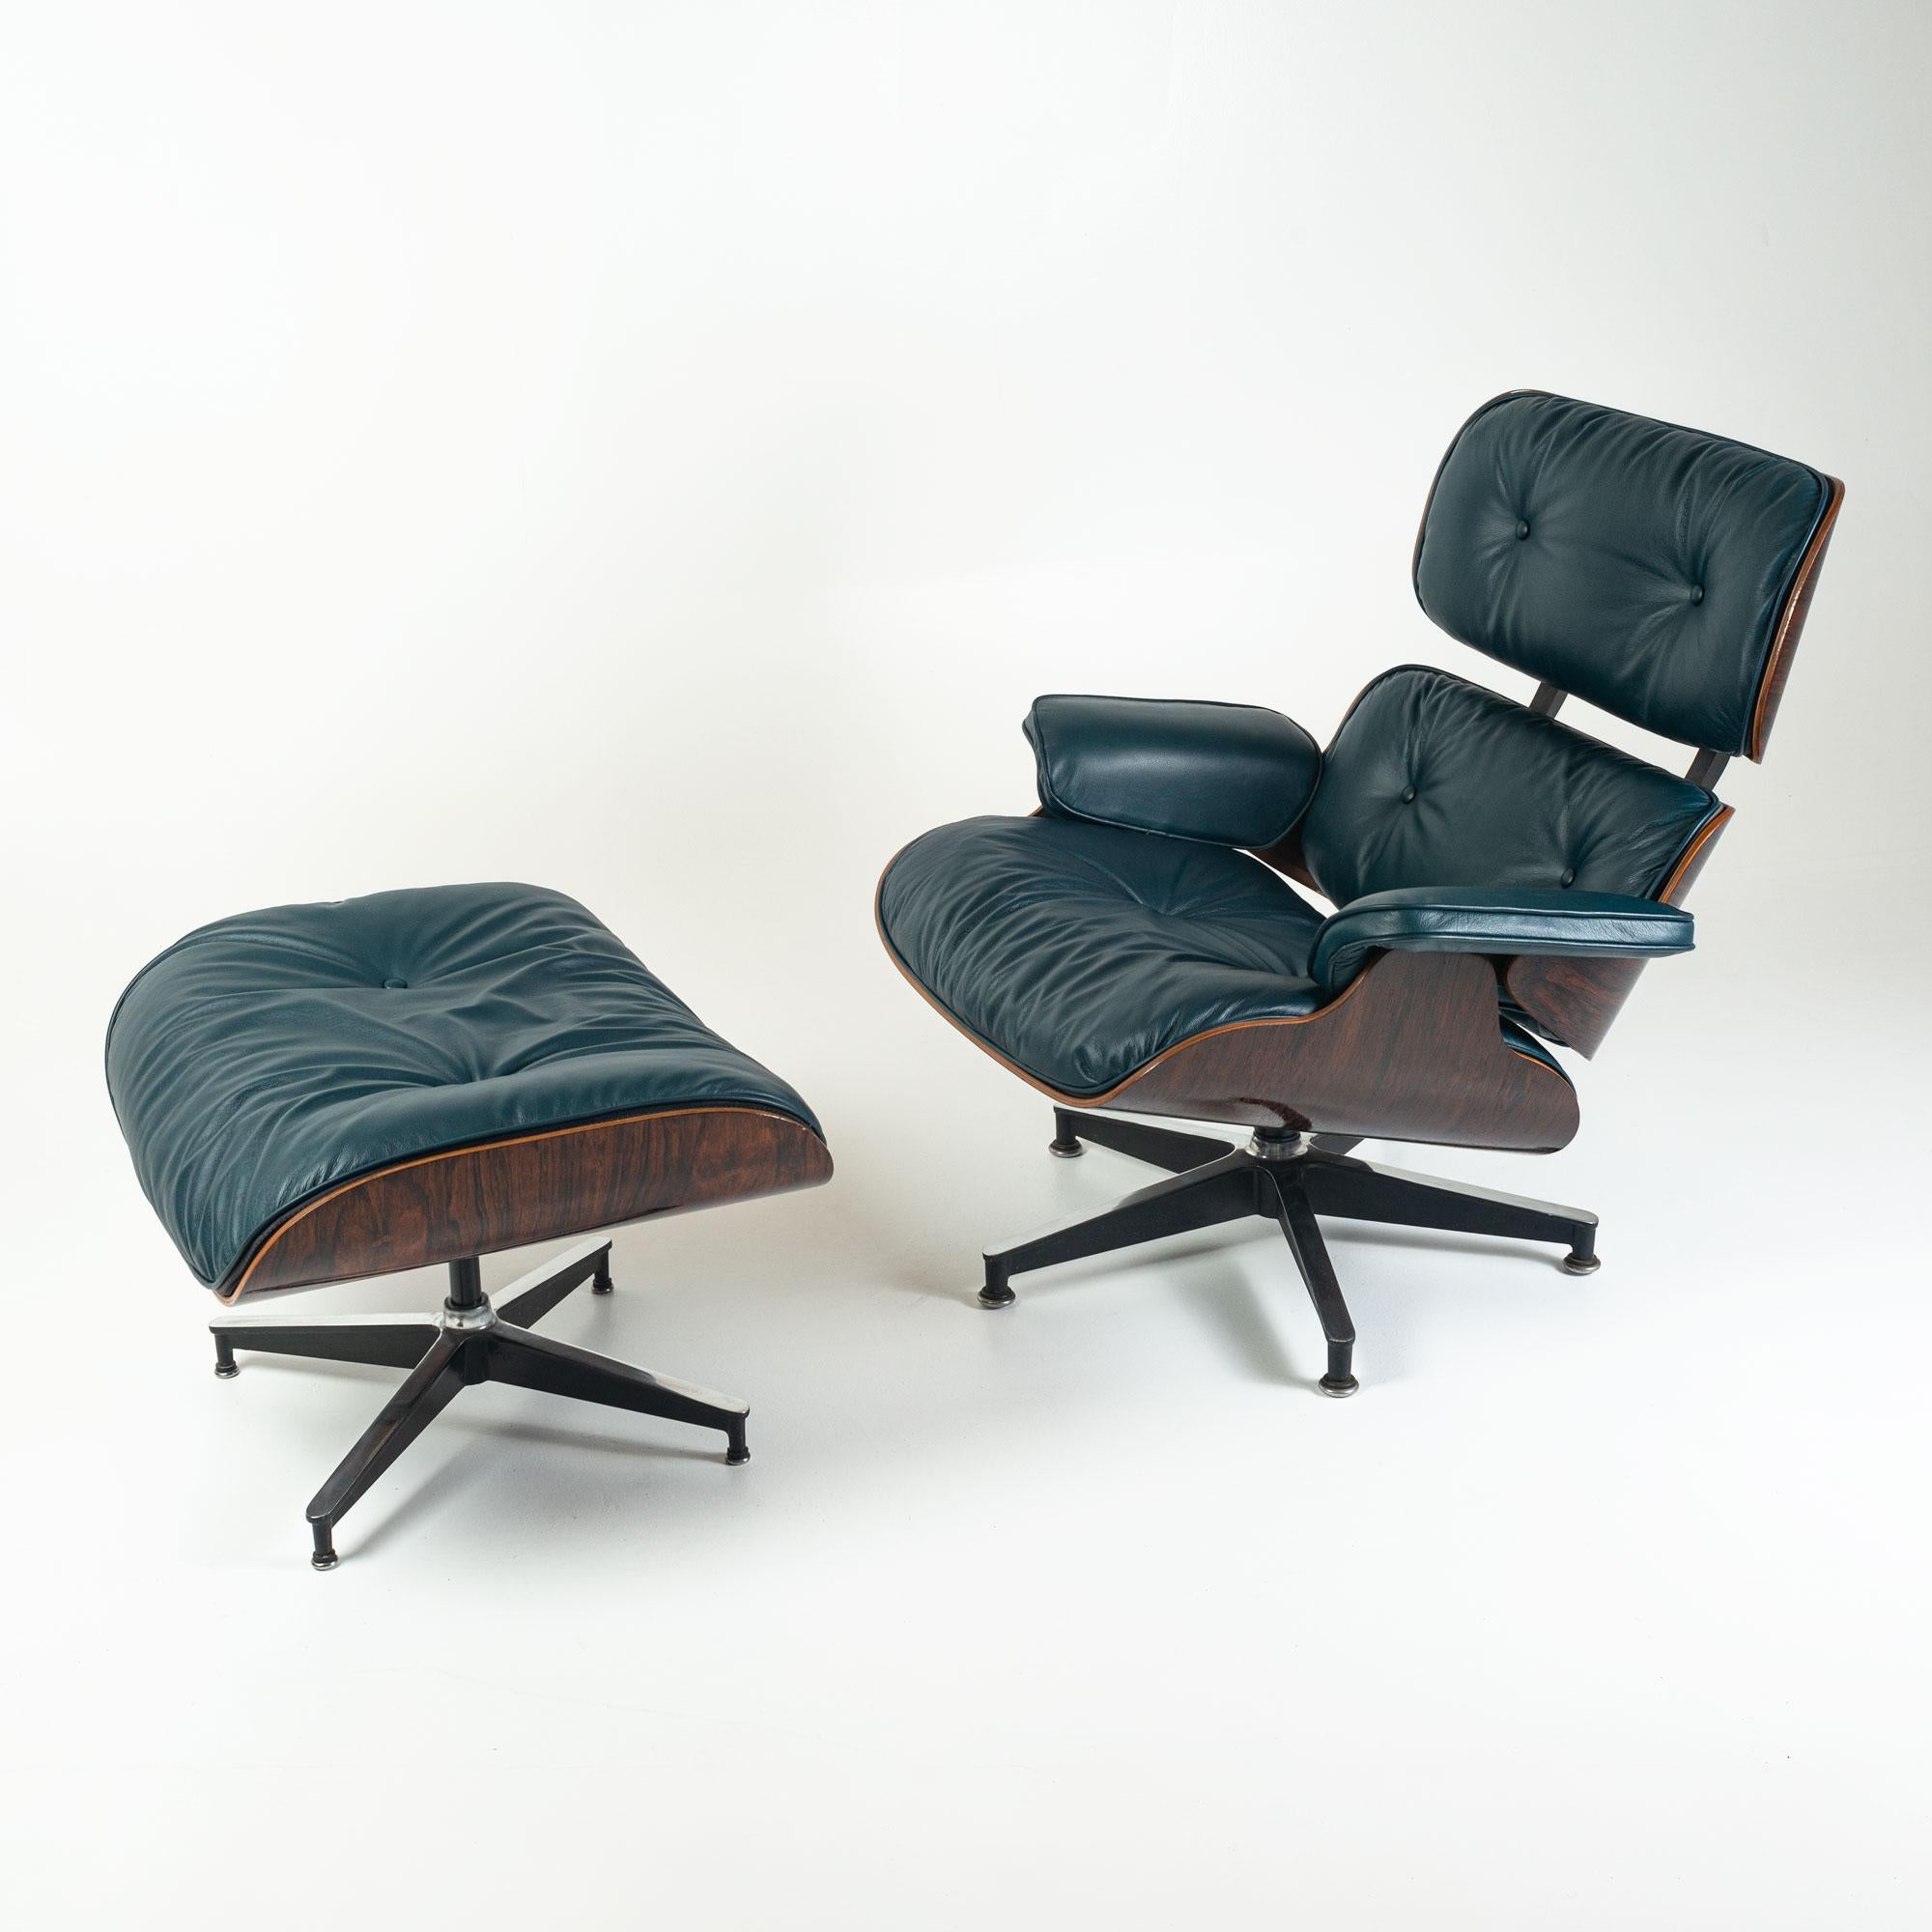 Mid-Century Modern 3rd Gen Eames Lounge Chair 670-671 in Dark Pine Green Aniline Leather